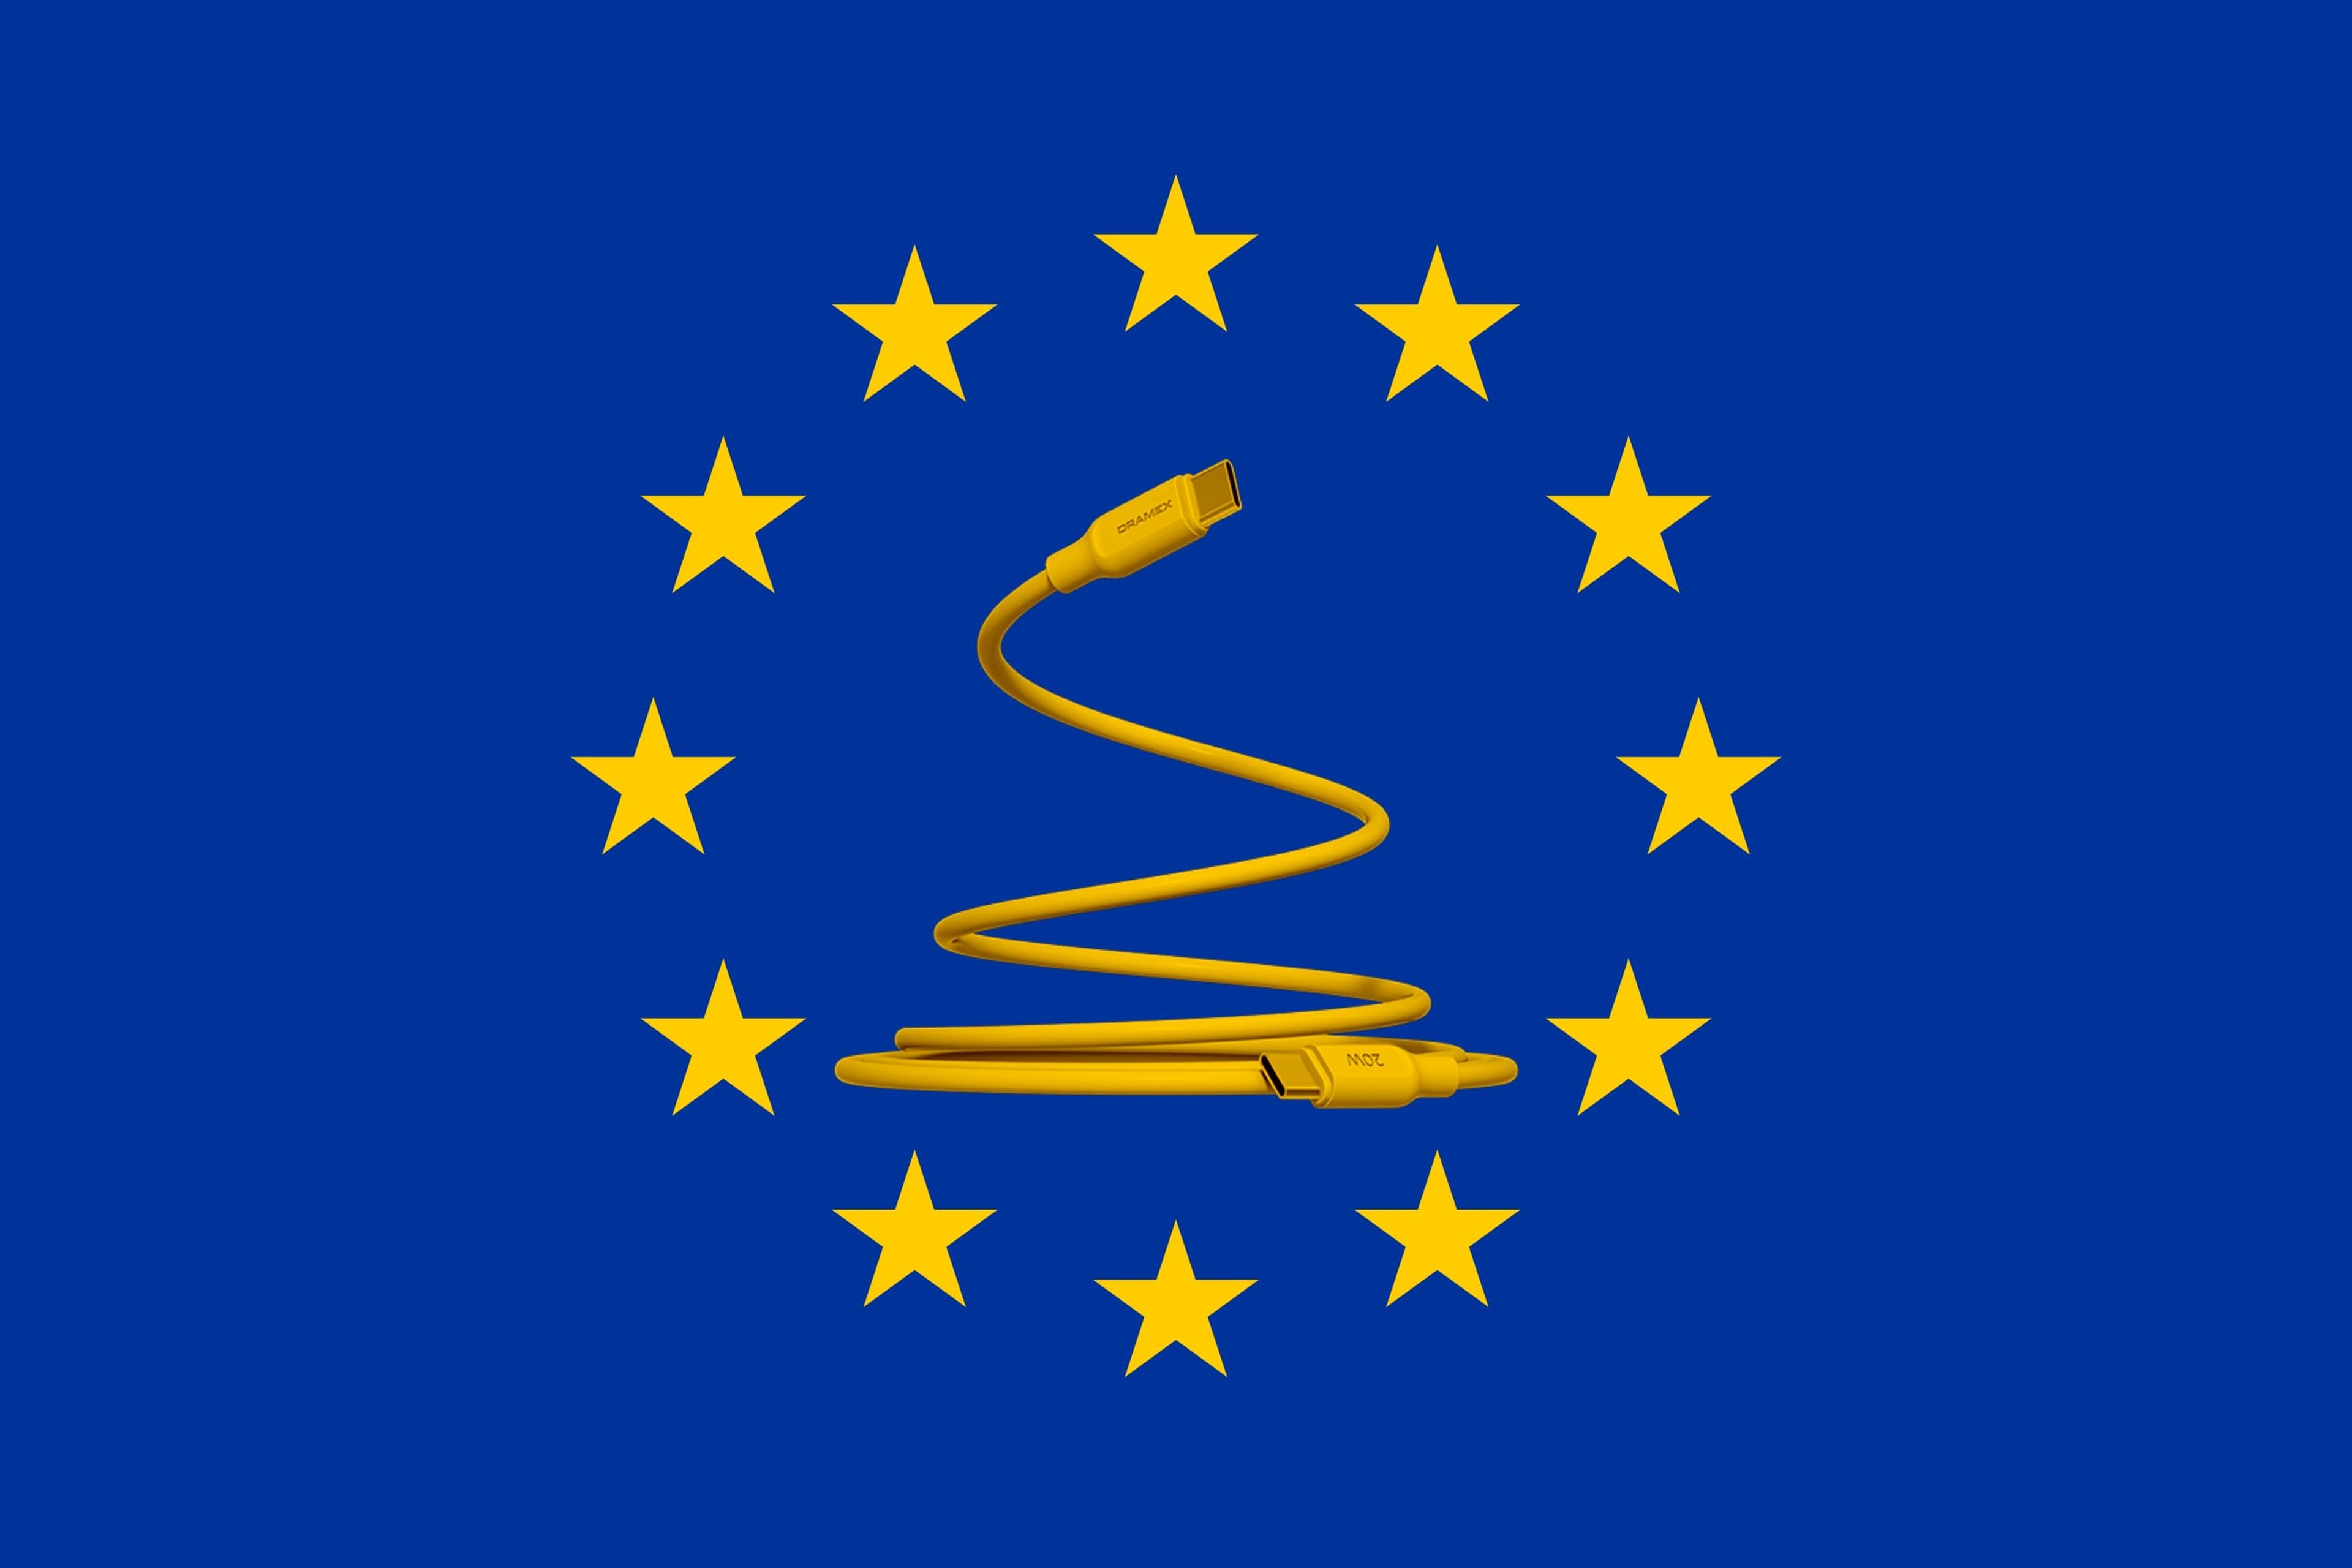 European Union flag with a USB-C cable